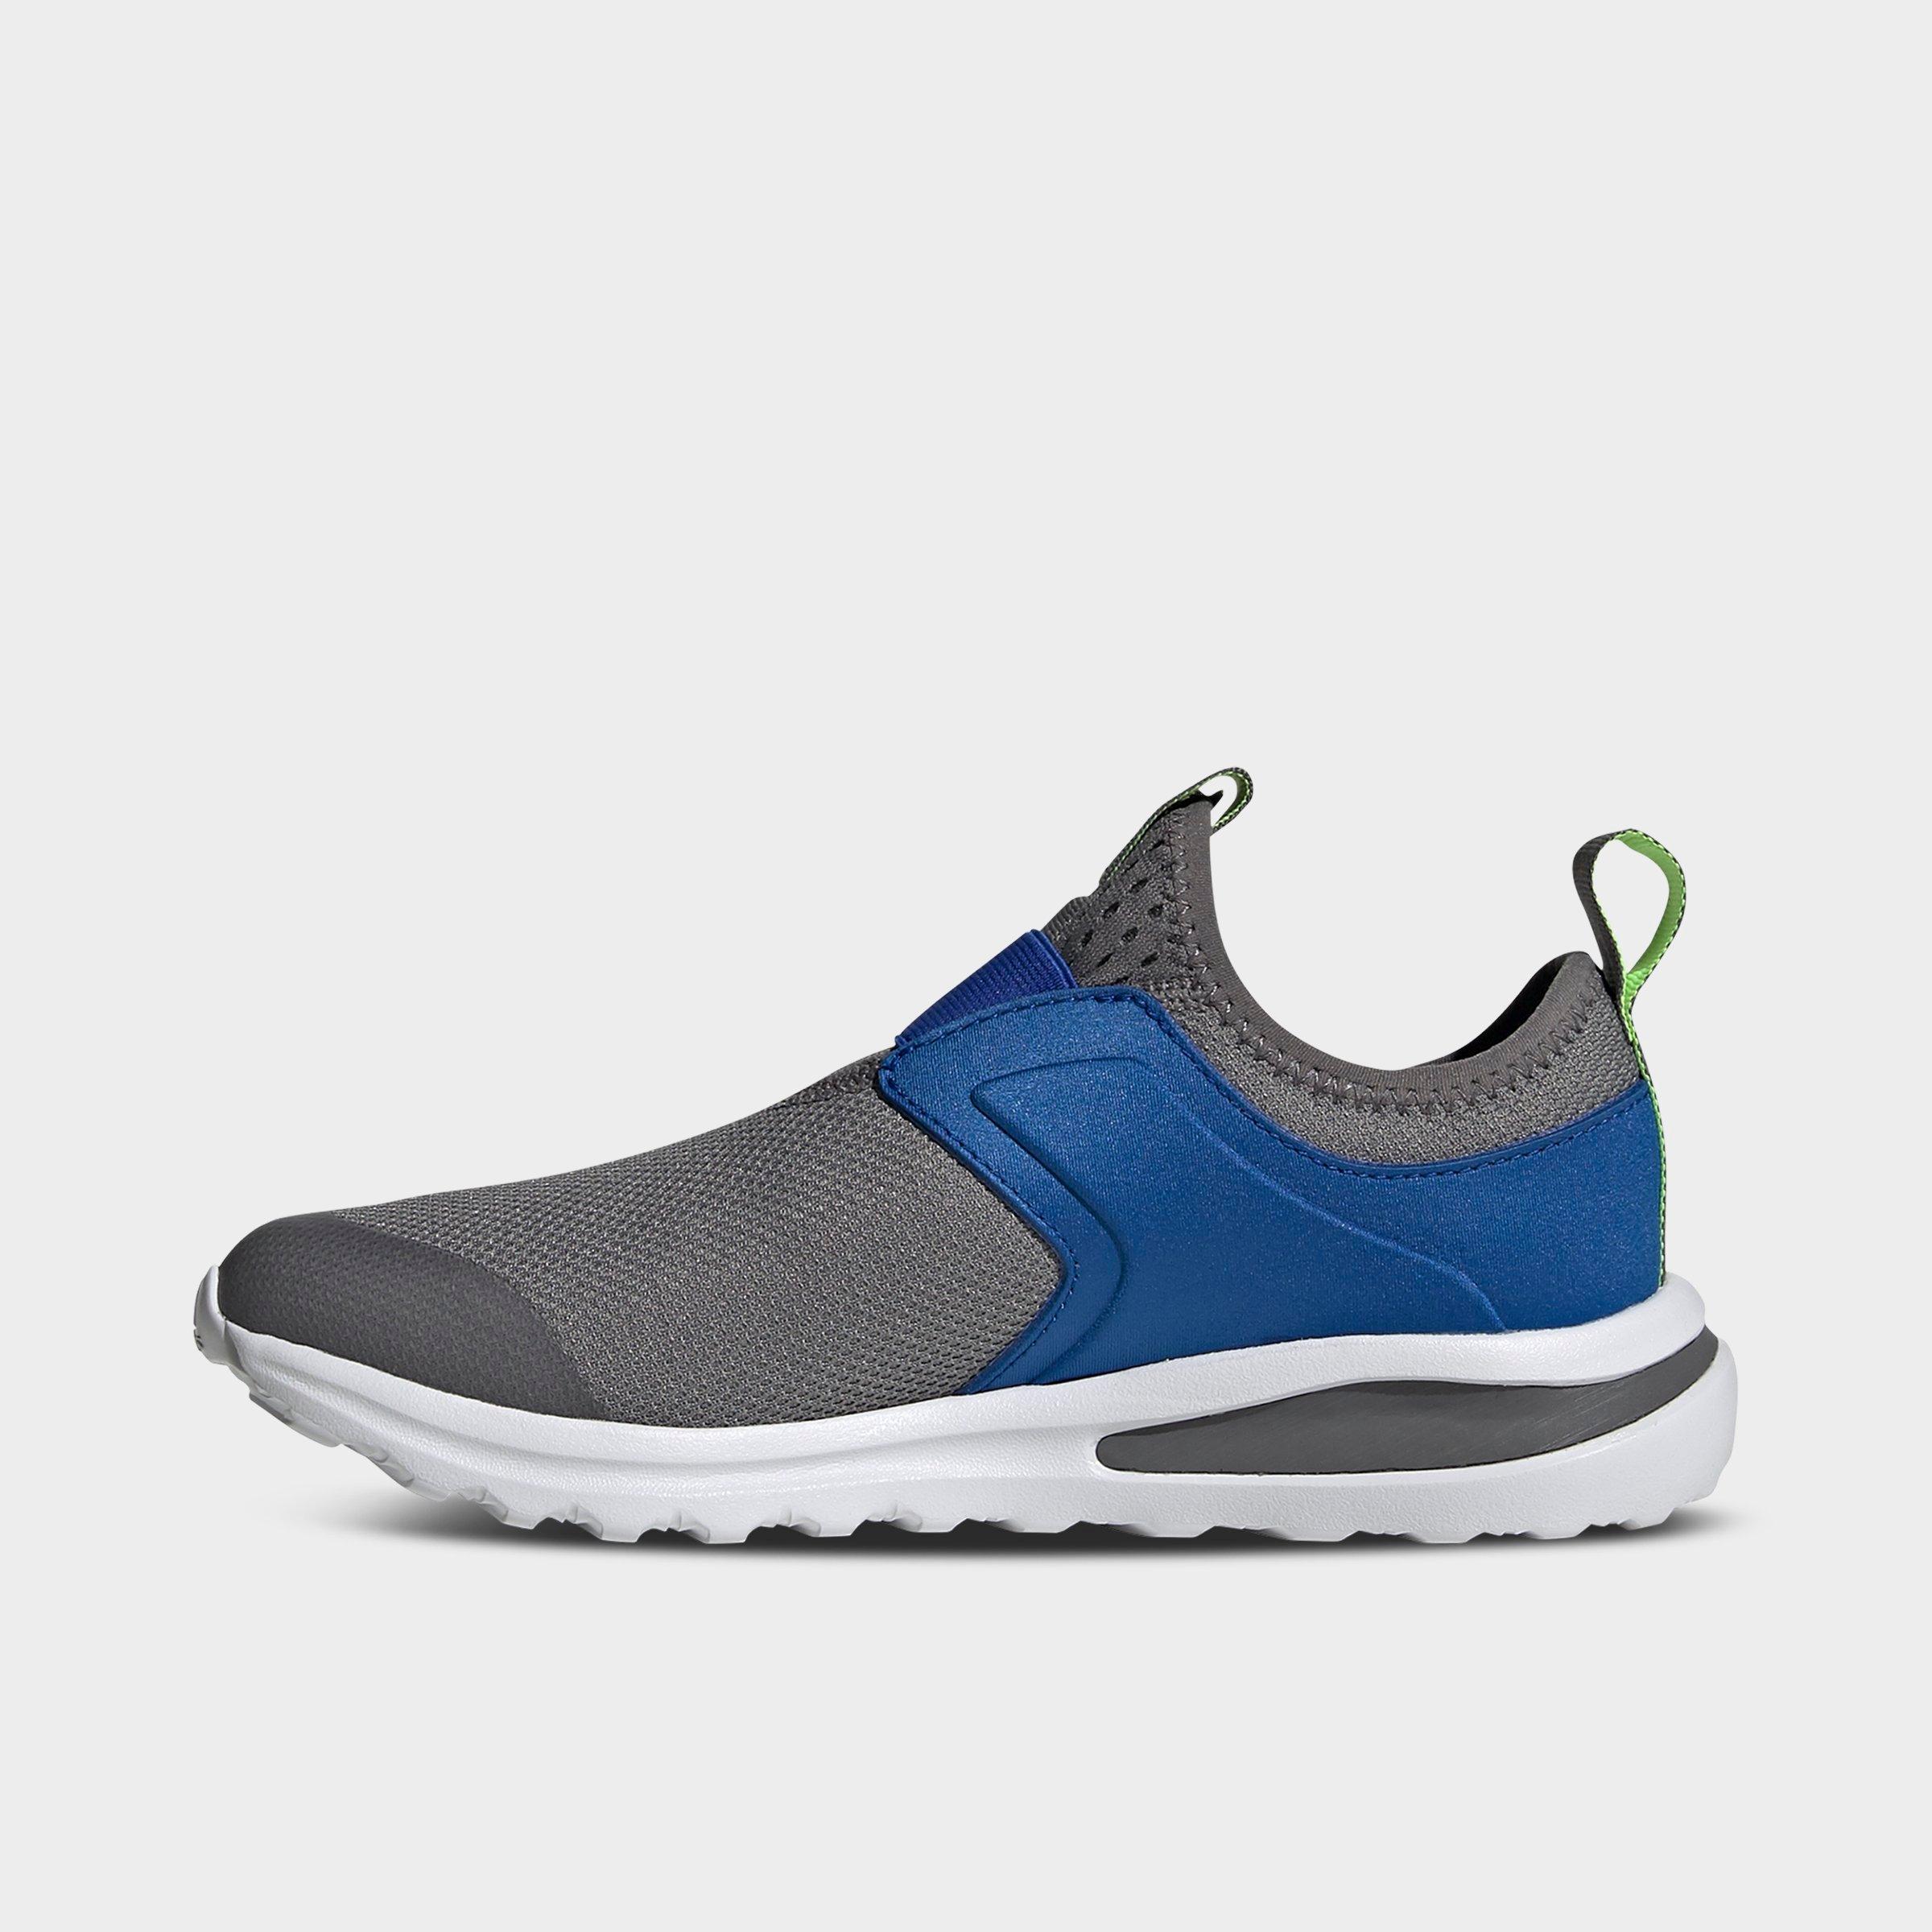 slip on running shoes adidas